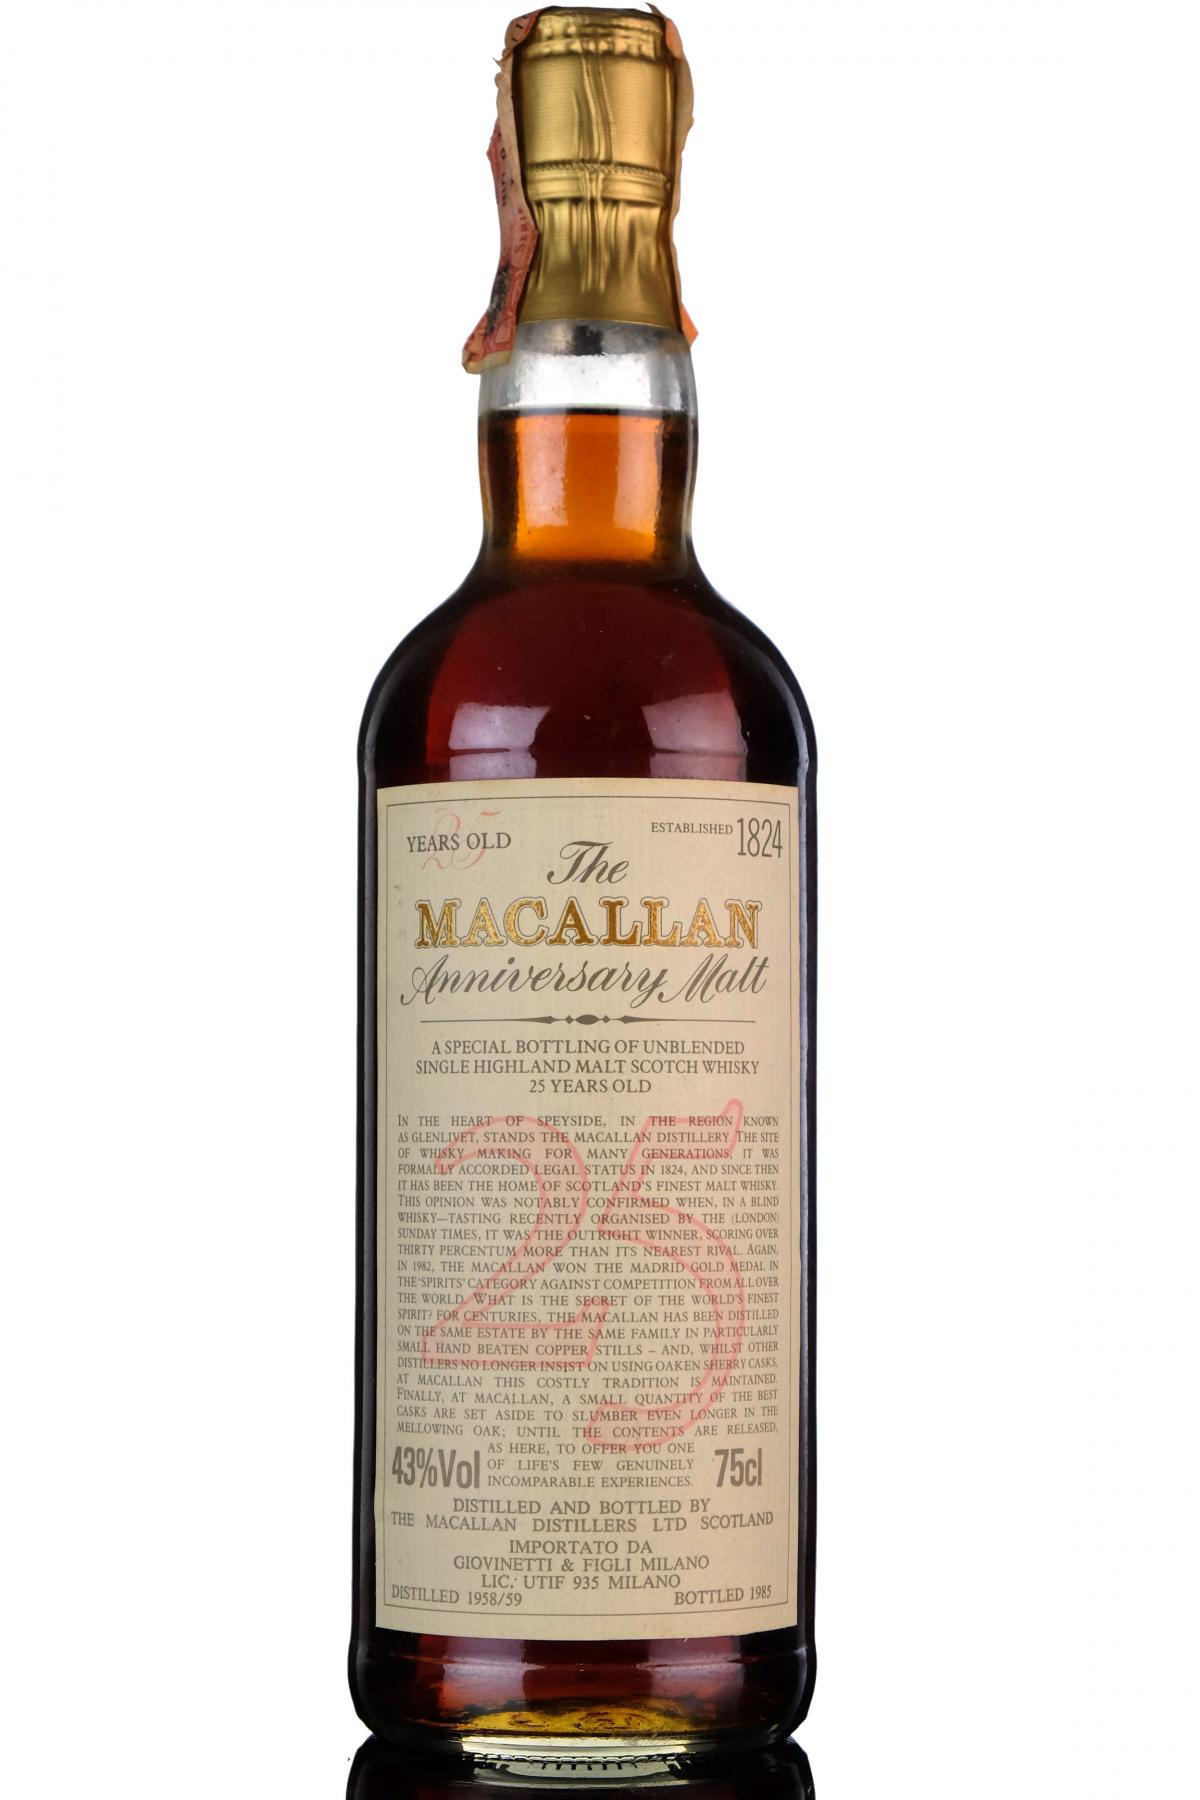 Macallan 1958/1959-1985 - 25 Year Old Anniversary Malt